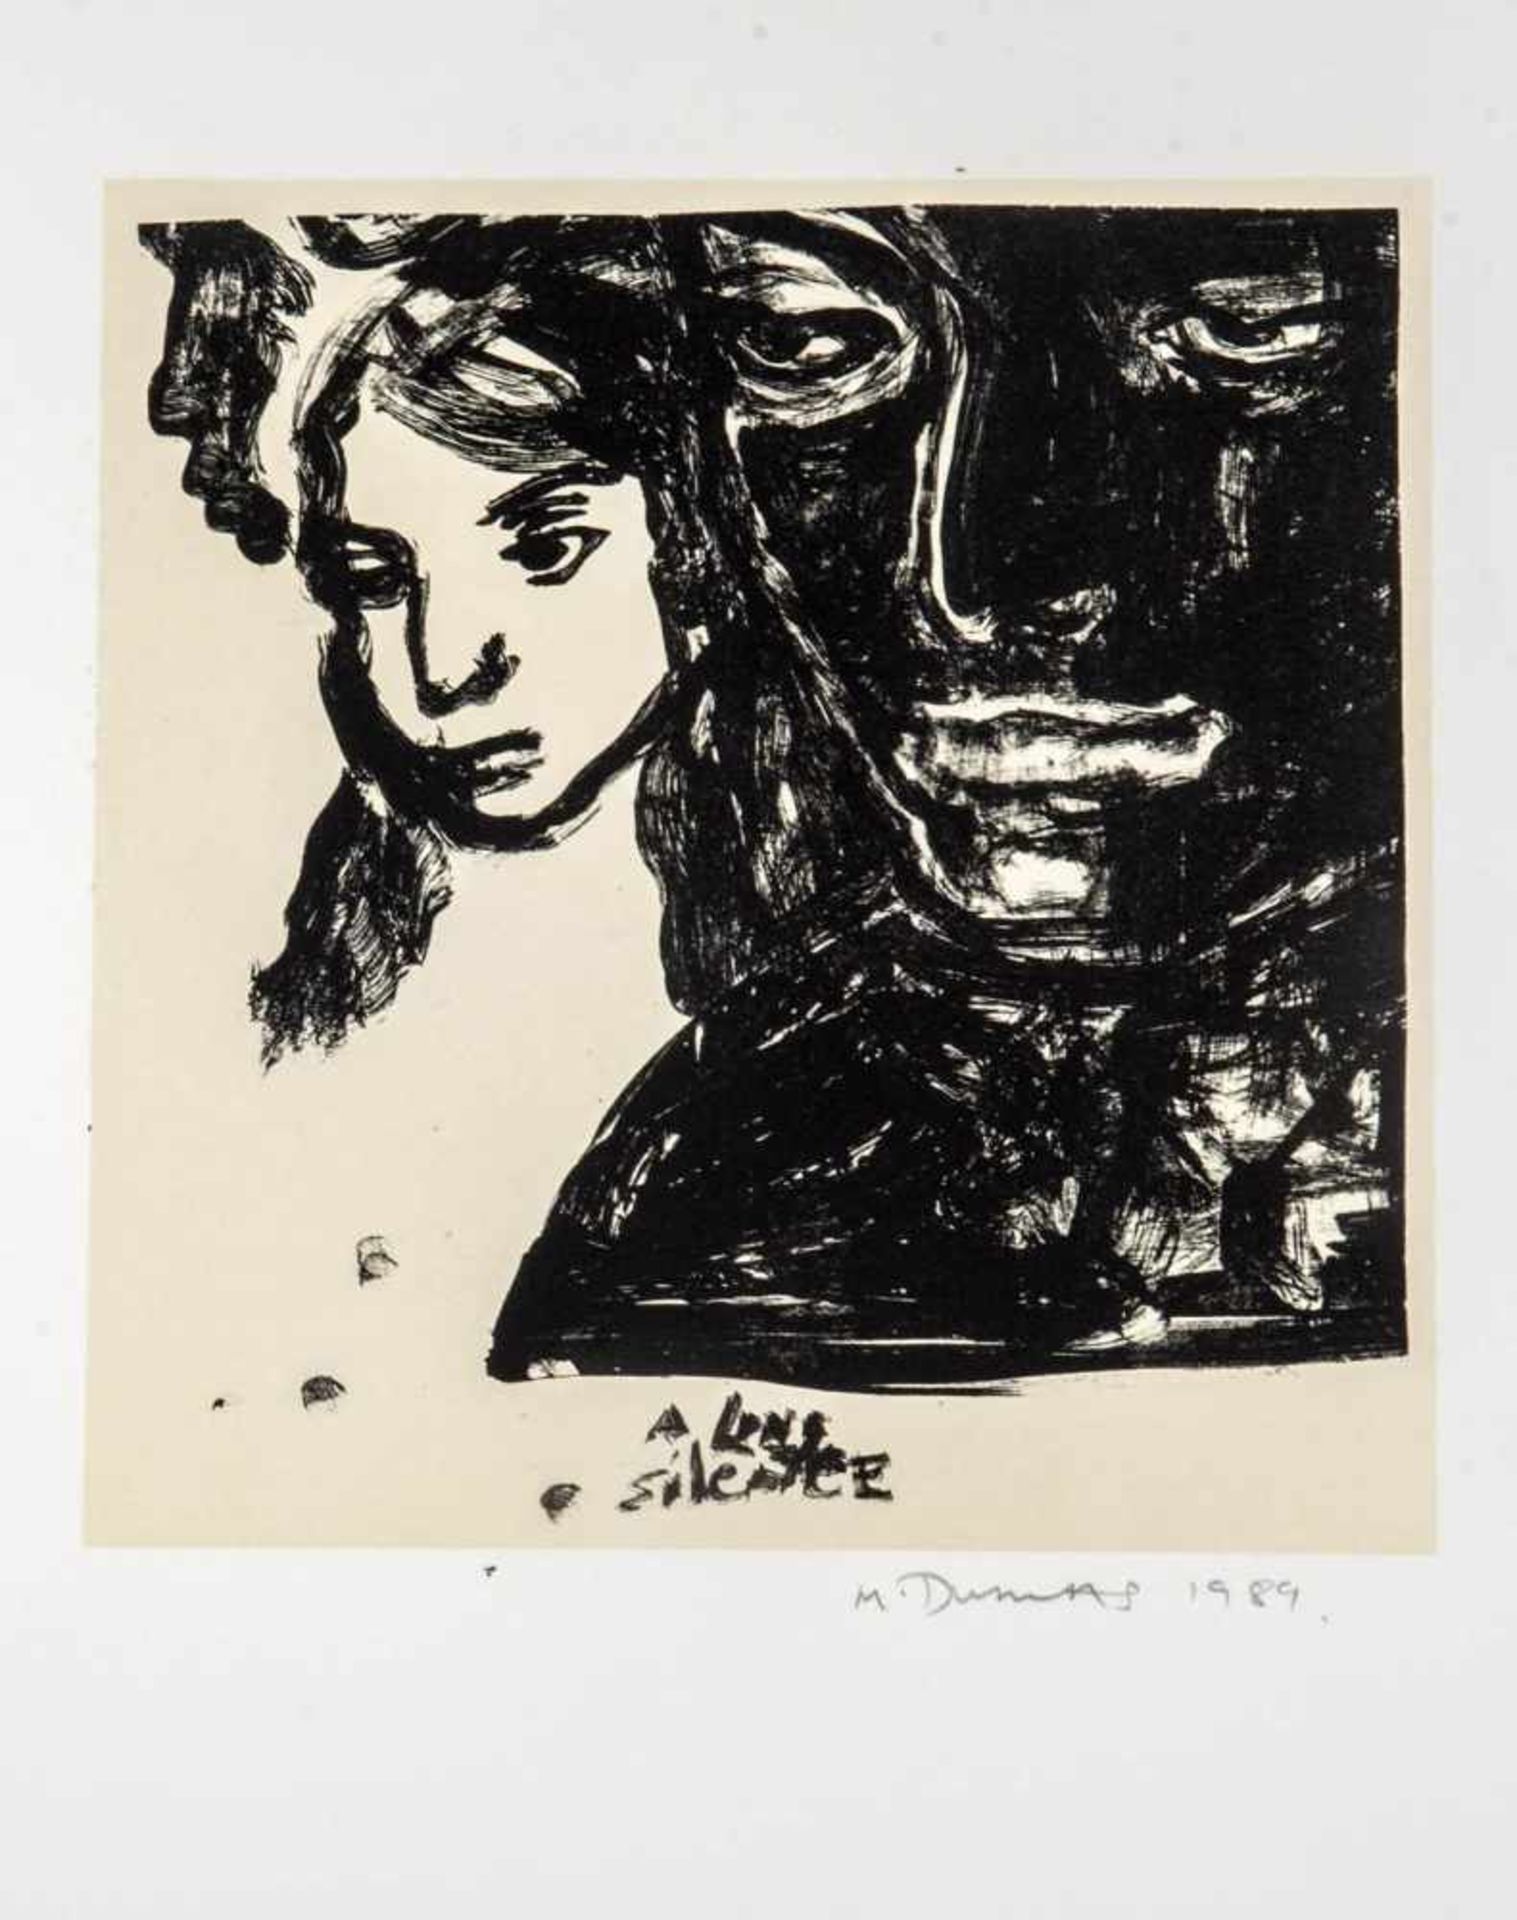 Dumas, Marlene, (geb. 1953)"A long silence" 1989, Farblithographie, 25,8 x 25 cm, rechts u. sign. u.